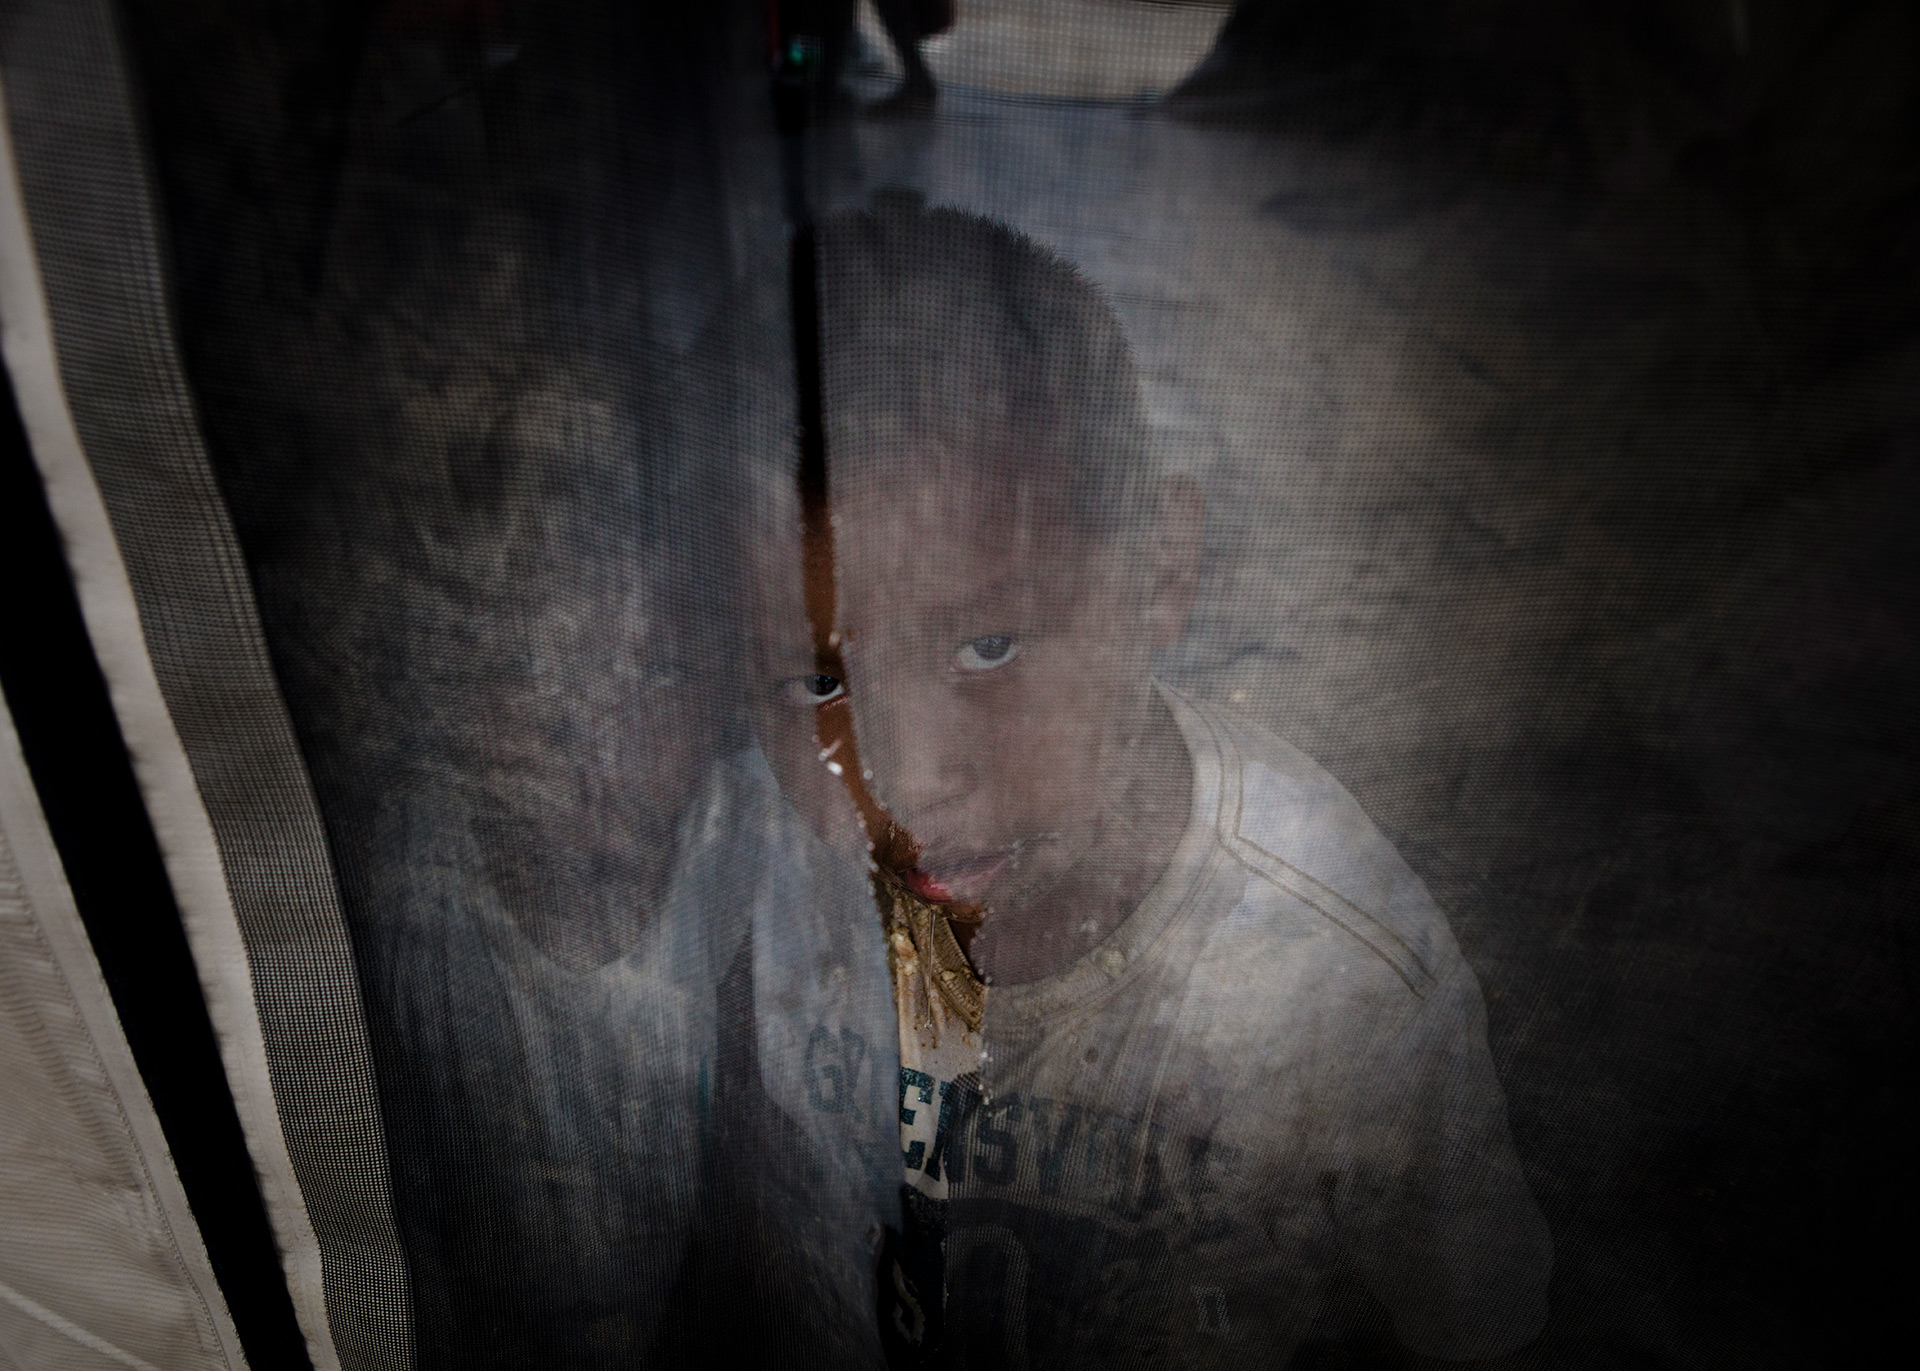 Due to measles, an indigenous Venezuelan boy is segregated at Pintolandia shelter, 2019.